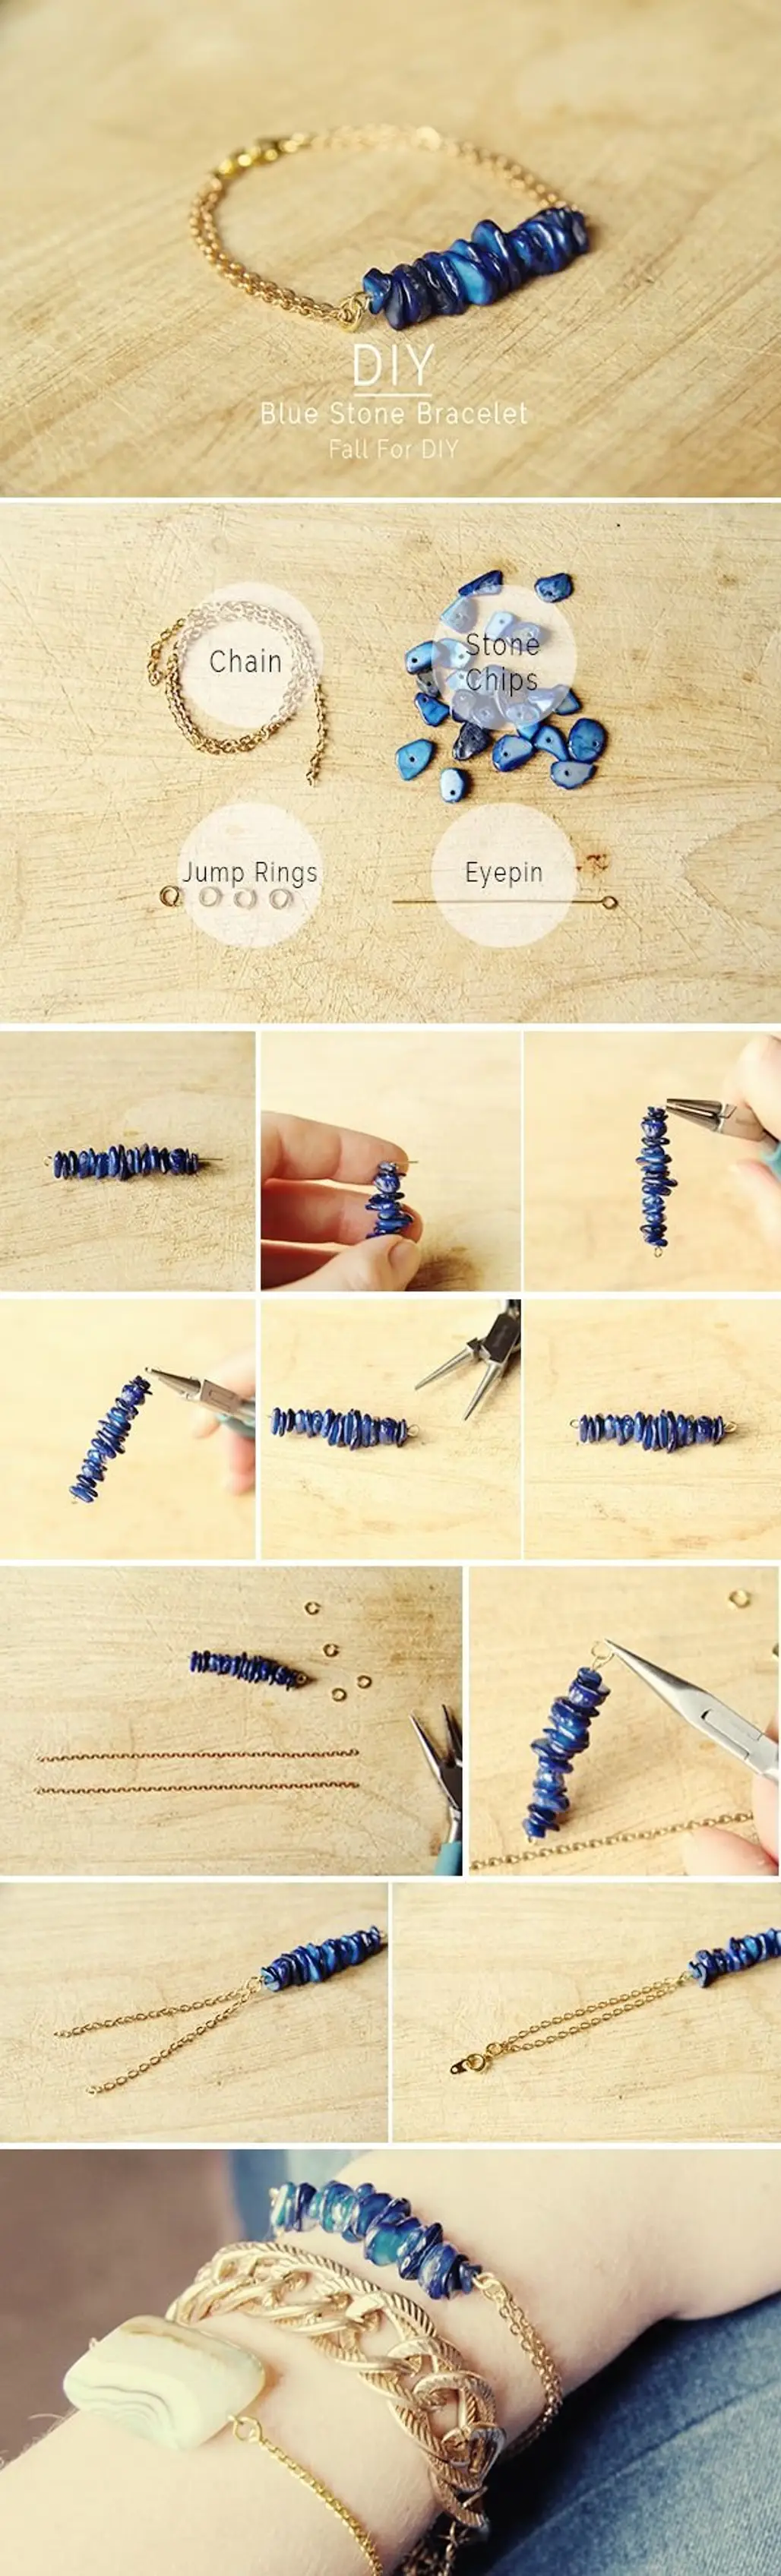 DIY Blue Stone Bracelet